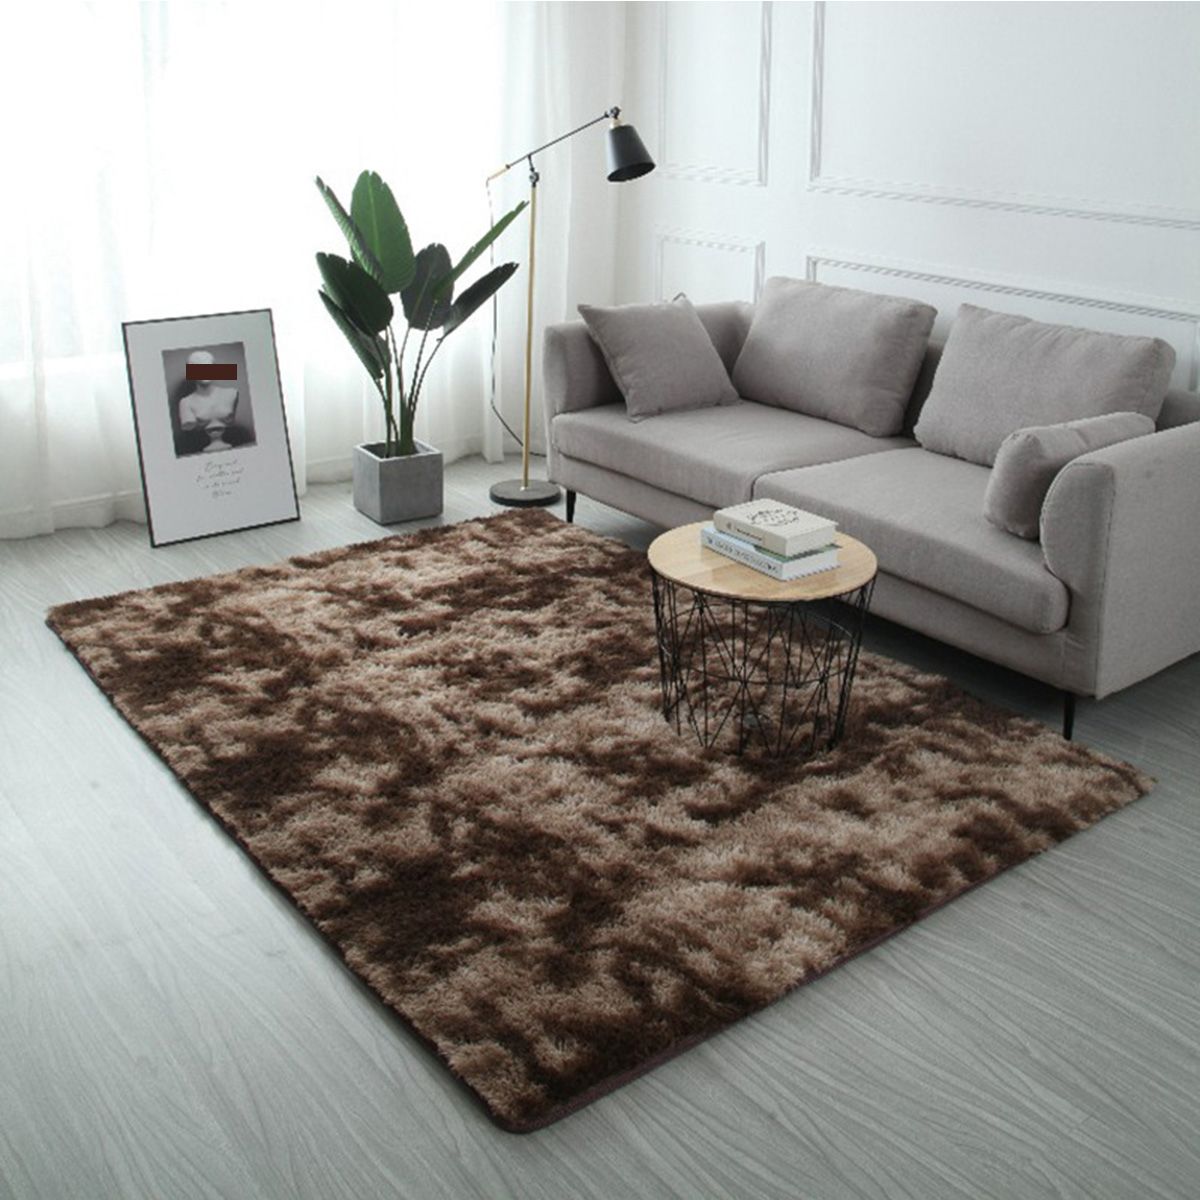 3-SIZE-Pad-Dyed-Gradient-Silk-Wool-Carpet-Super-Soft-Rug-Indoor-Modern-Shag-Area-Rug-Silky-Rugs-Bedr-1602690